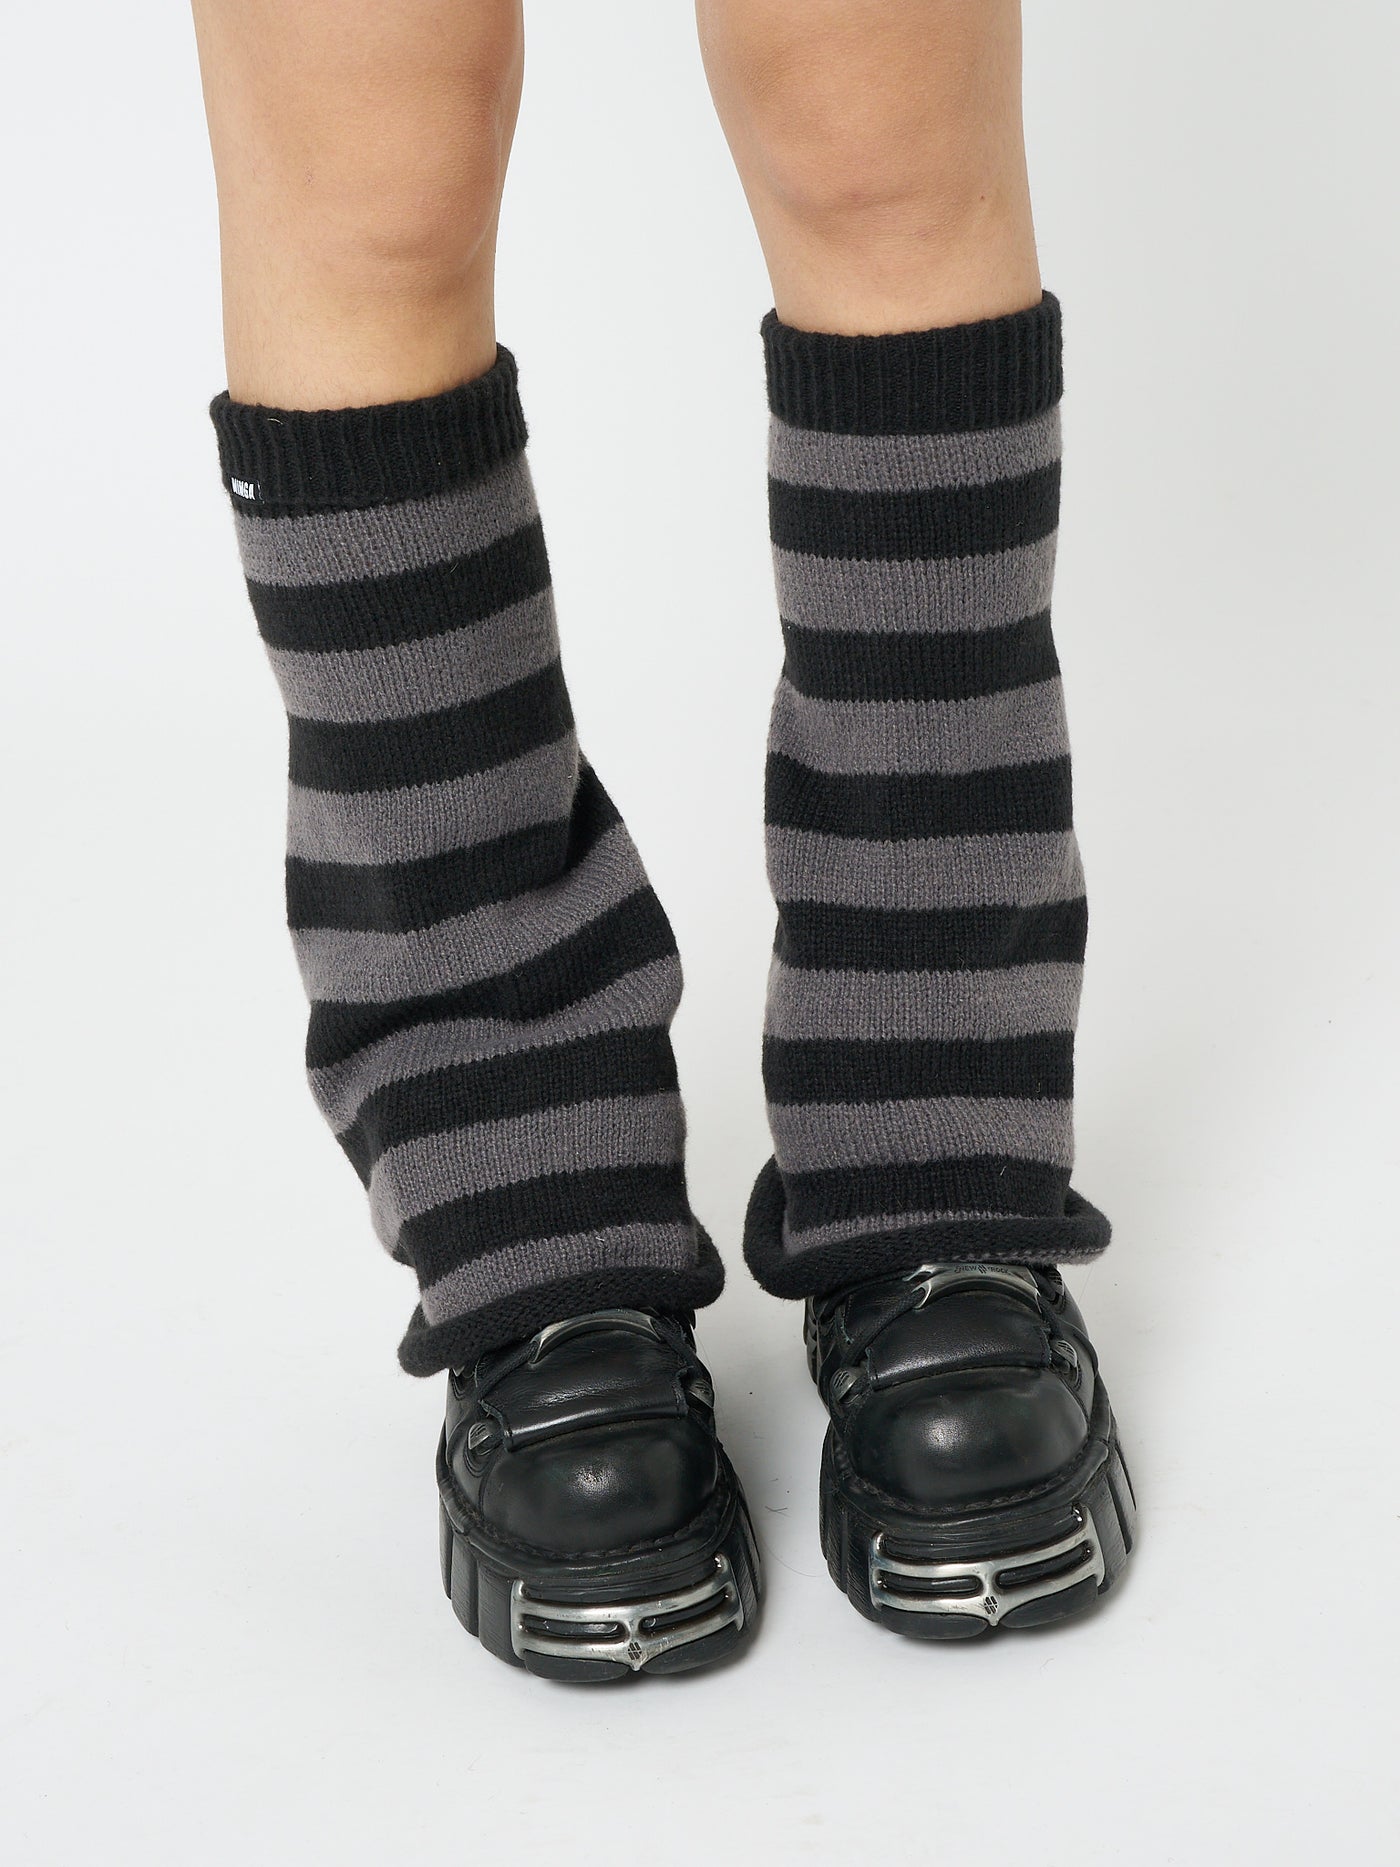 Black & Grey Striped Flare Leg Warmers - Minga London